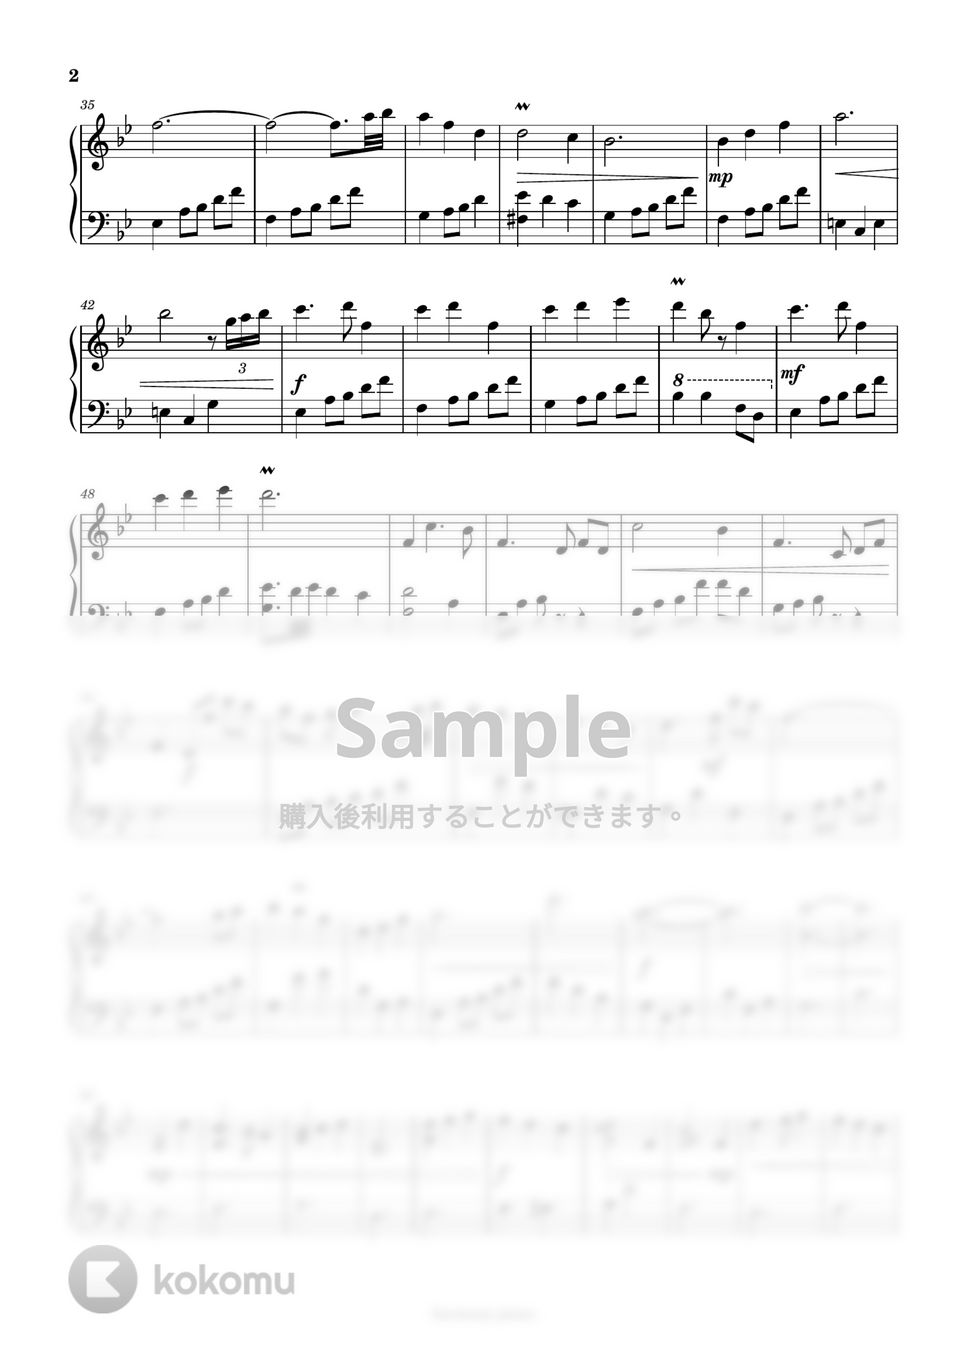 silent - BGM「切ない三角関係」 (目黒蓮×川口春奈) by harmony piano